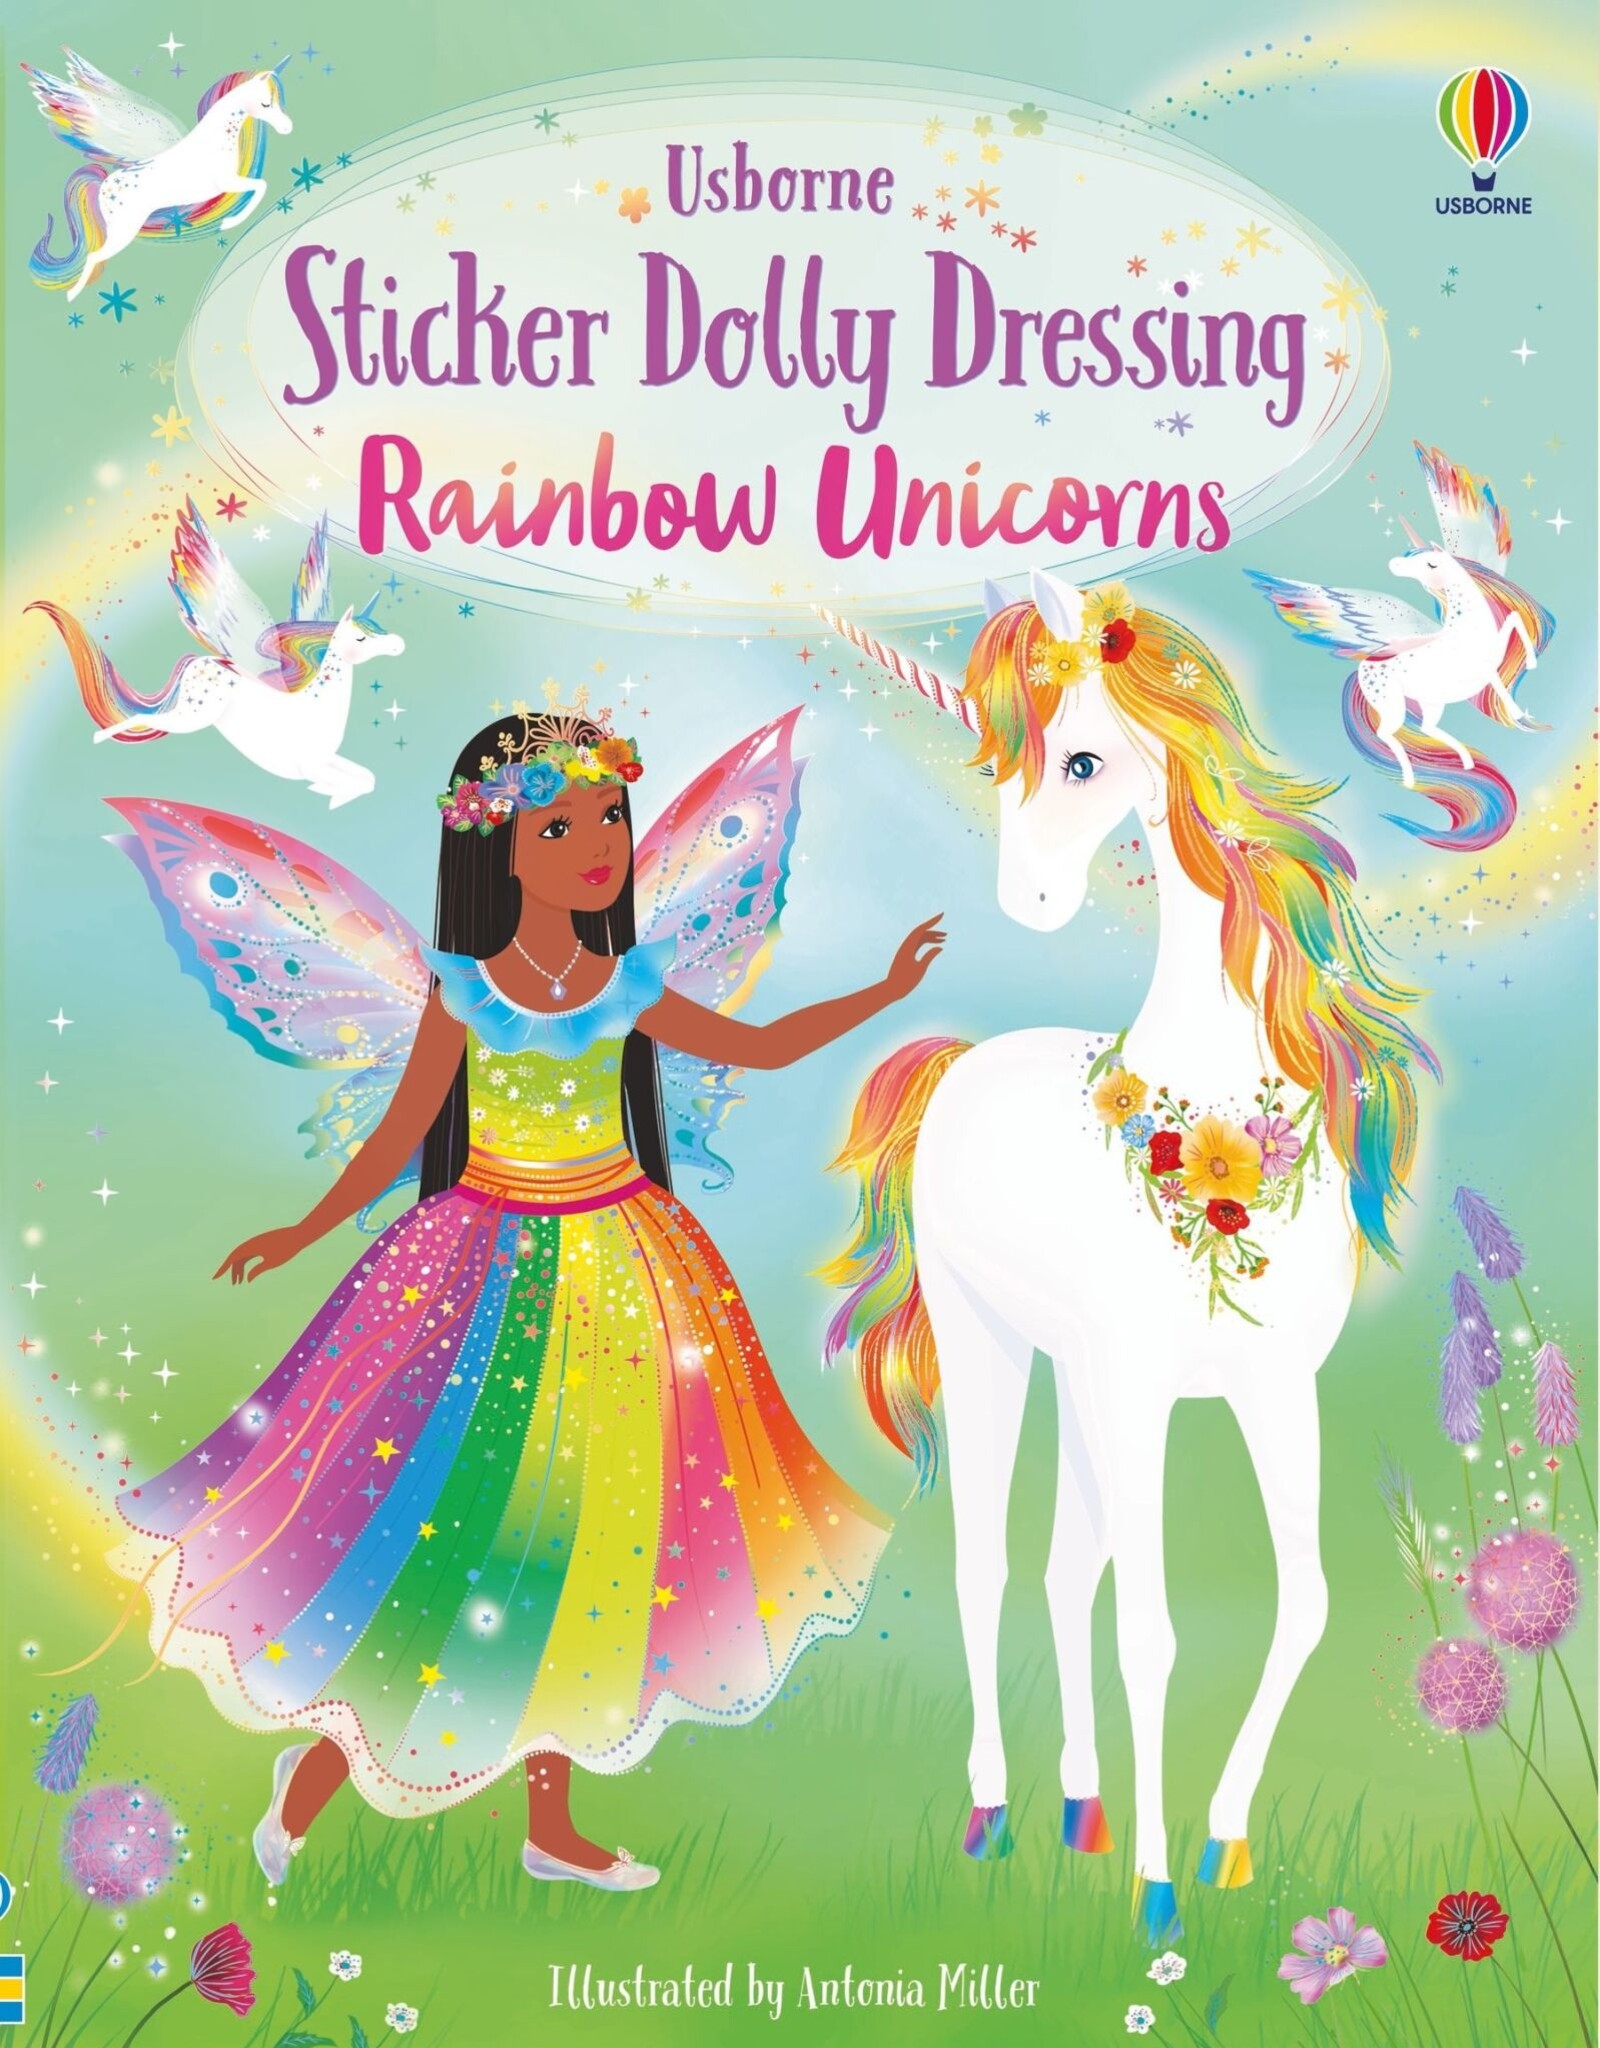 Usborne Sticker Dolly Dressing: Rainbow Unicorn